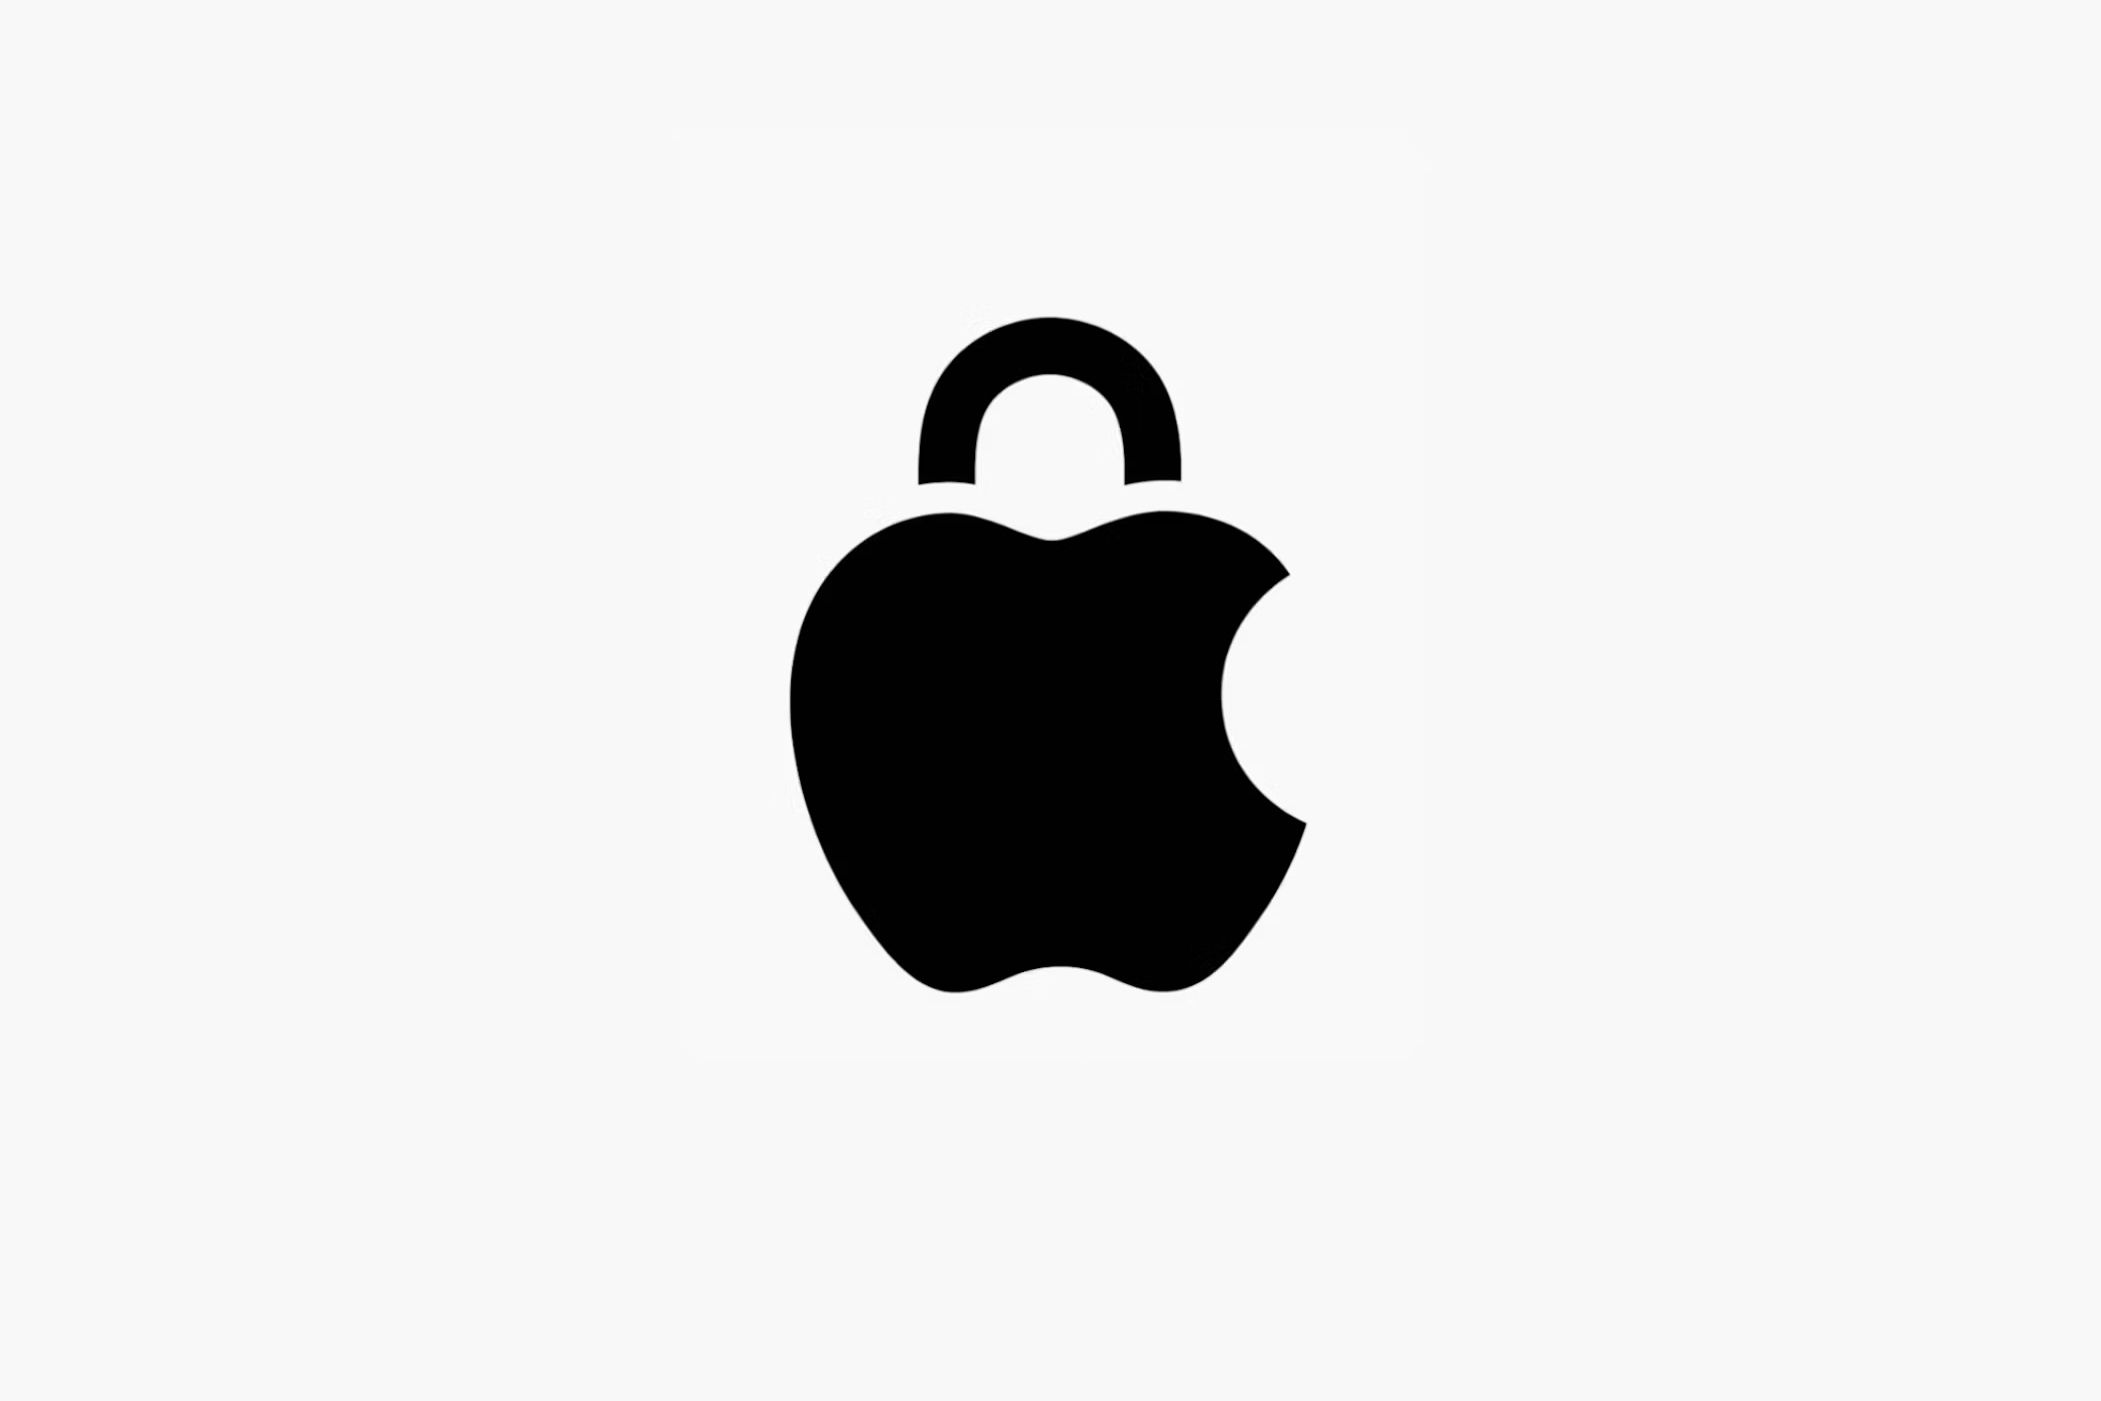 Apple logo with a padlock.